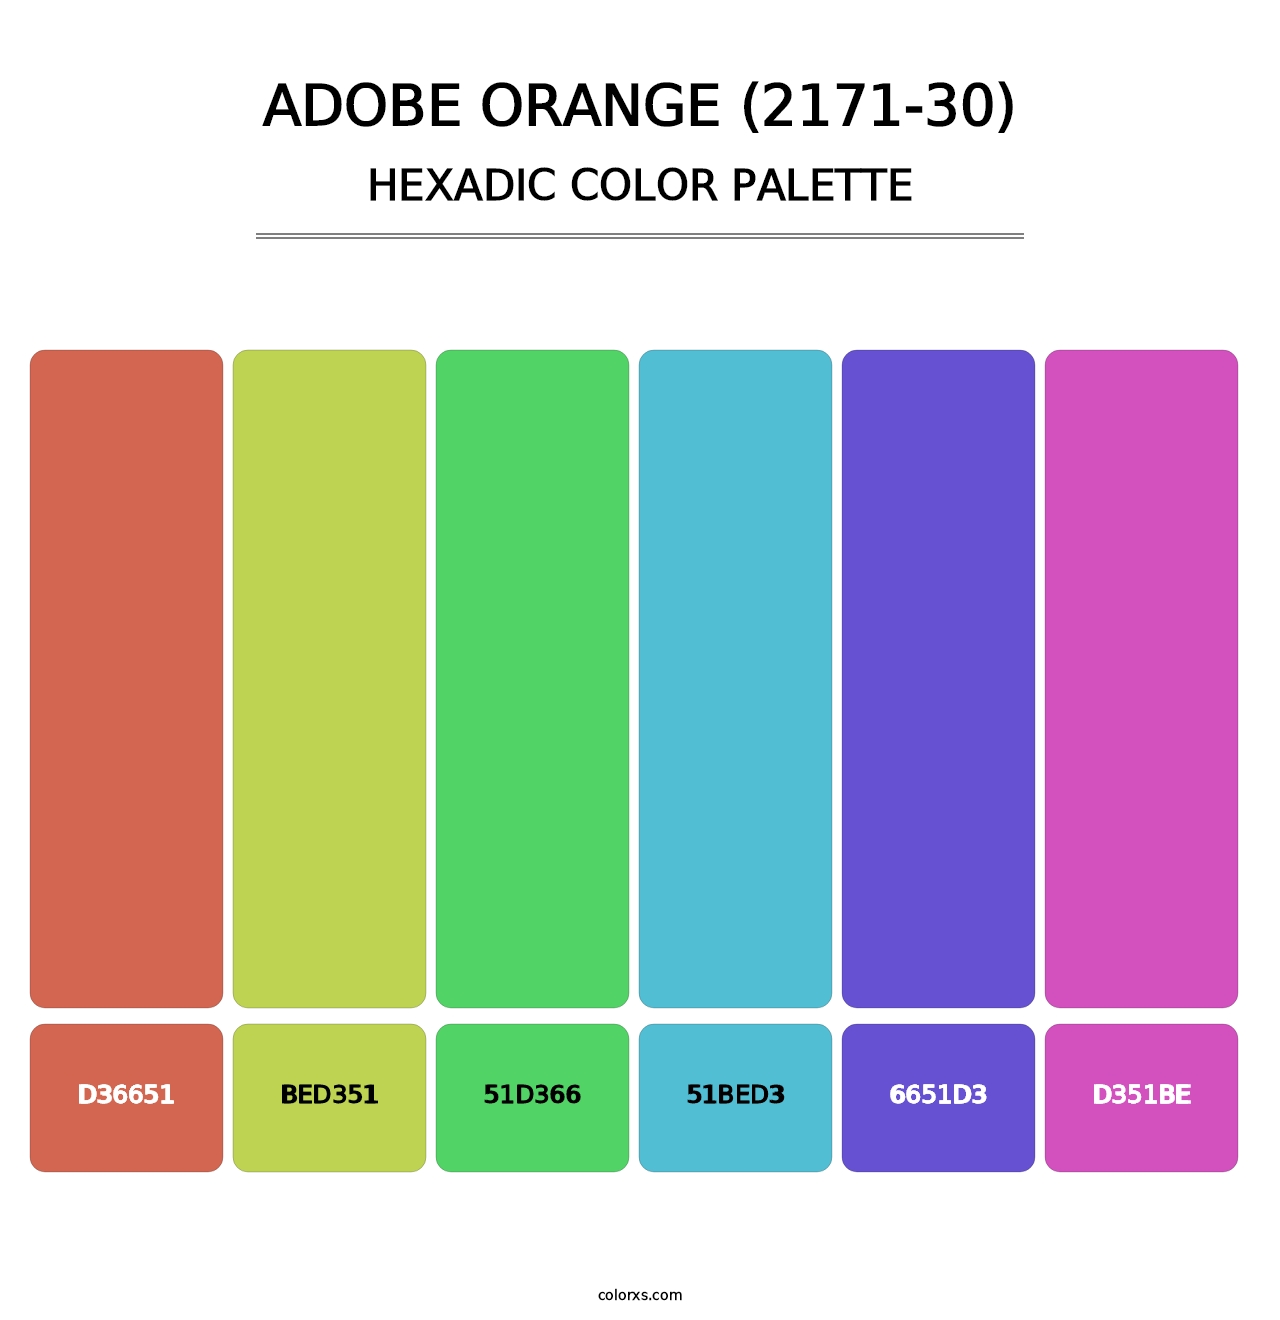 Adobe Orange (2171-30) - Hexadic Color Palette